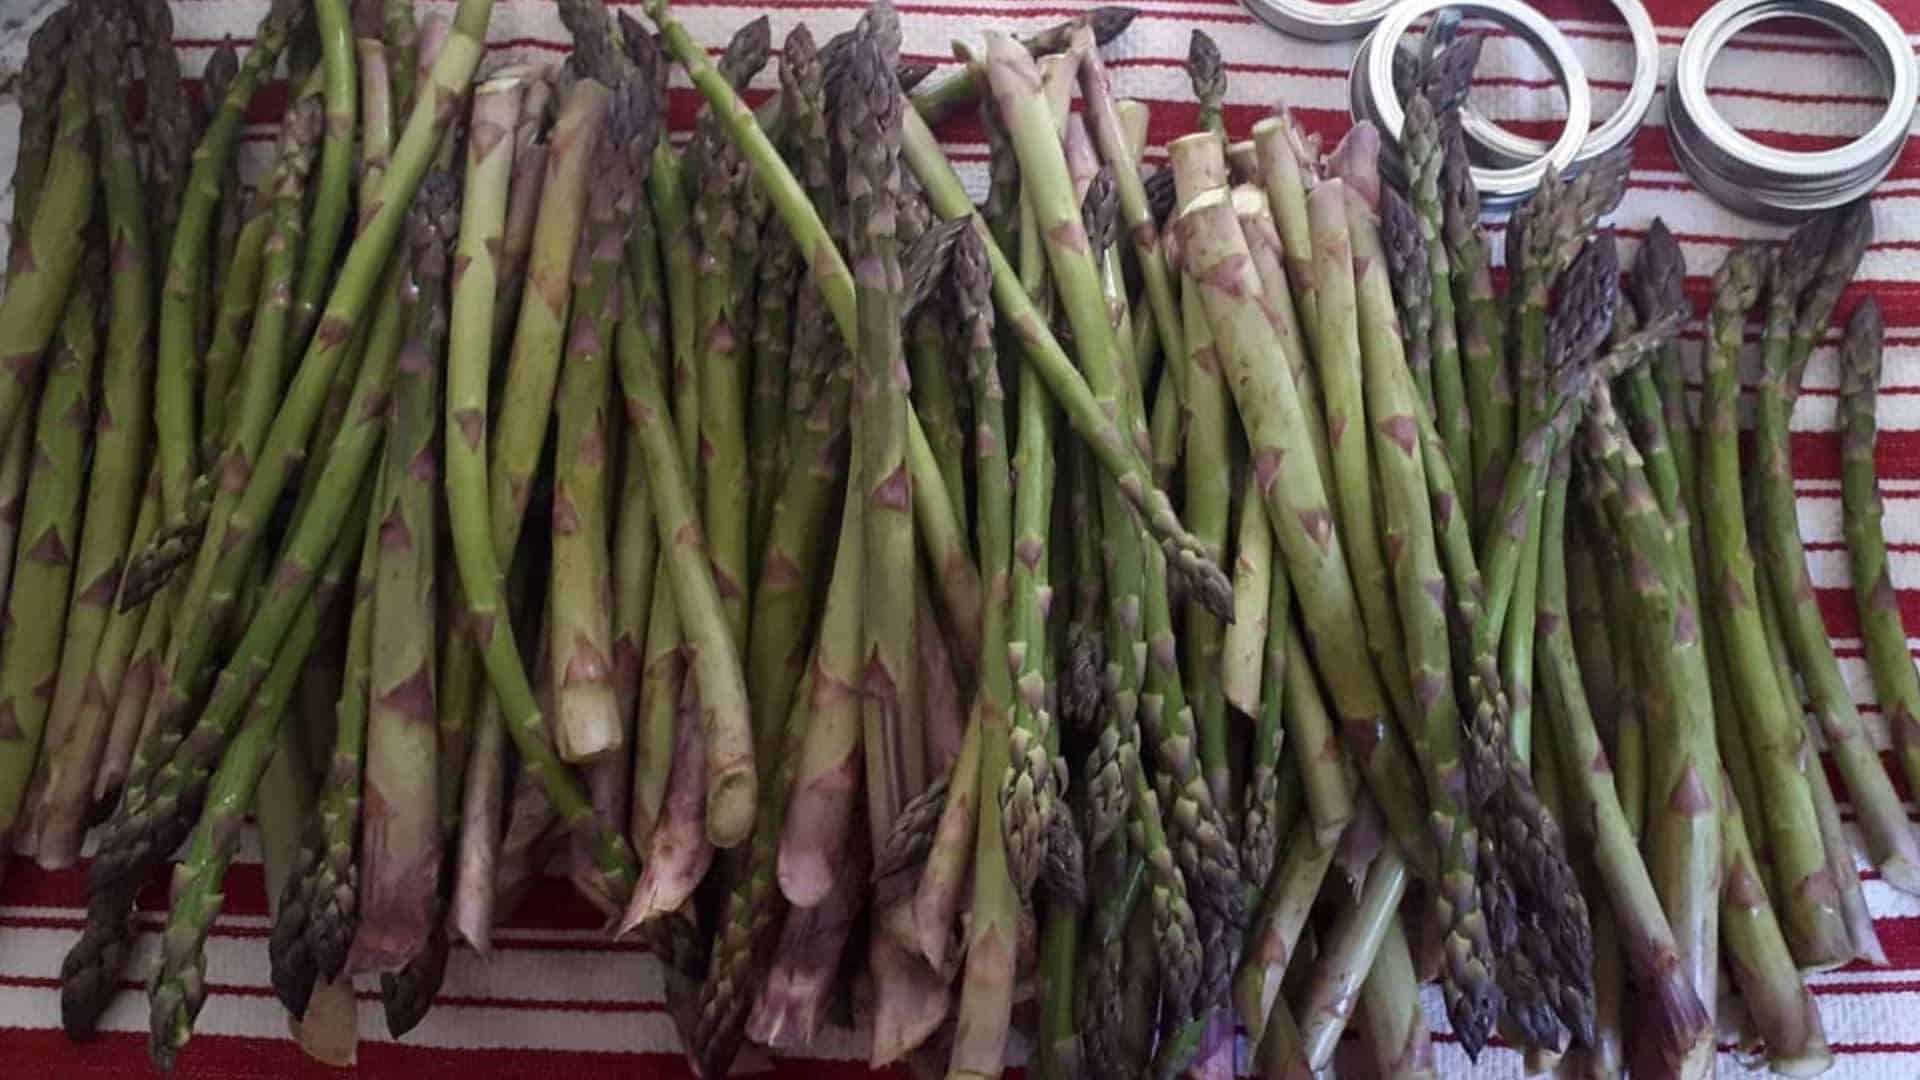 Asparagus - 1 pound